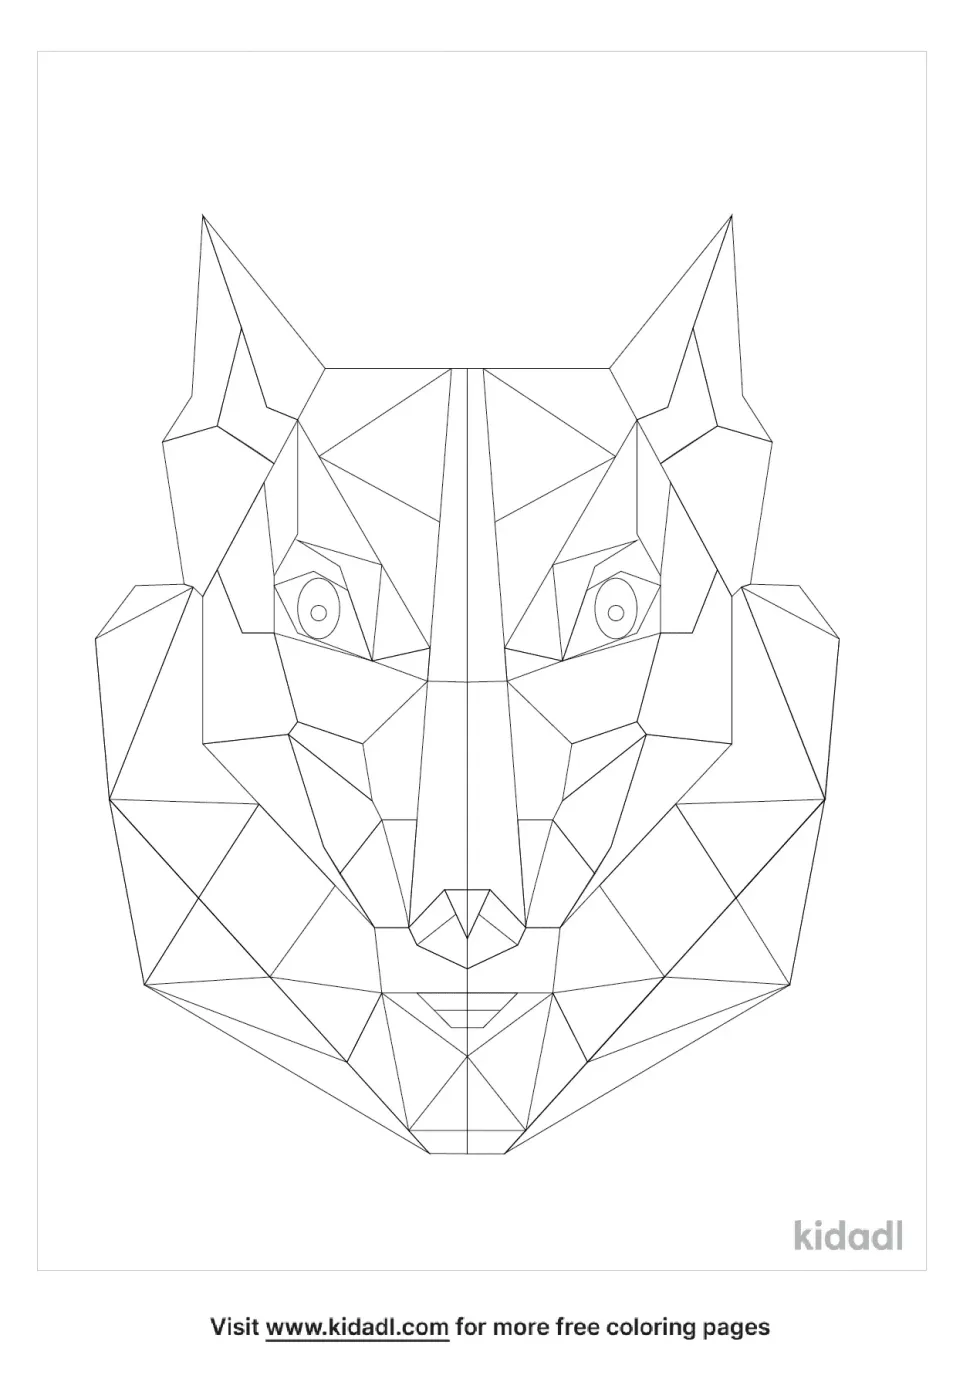 Geometric Wolf Head